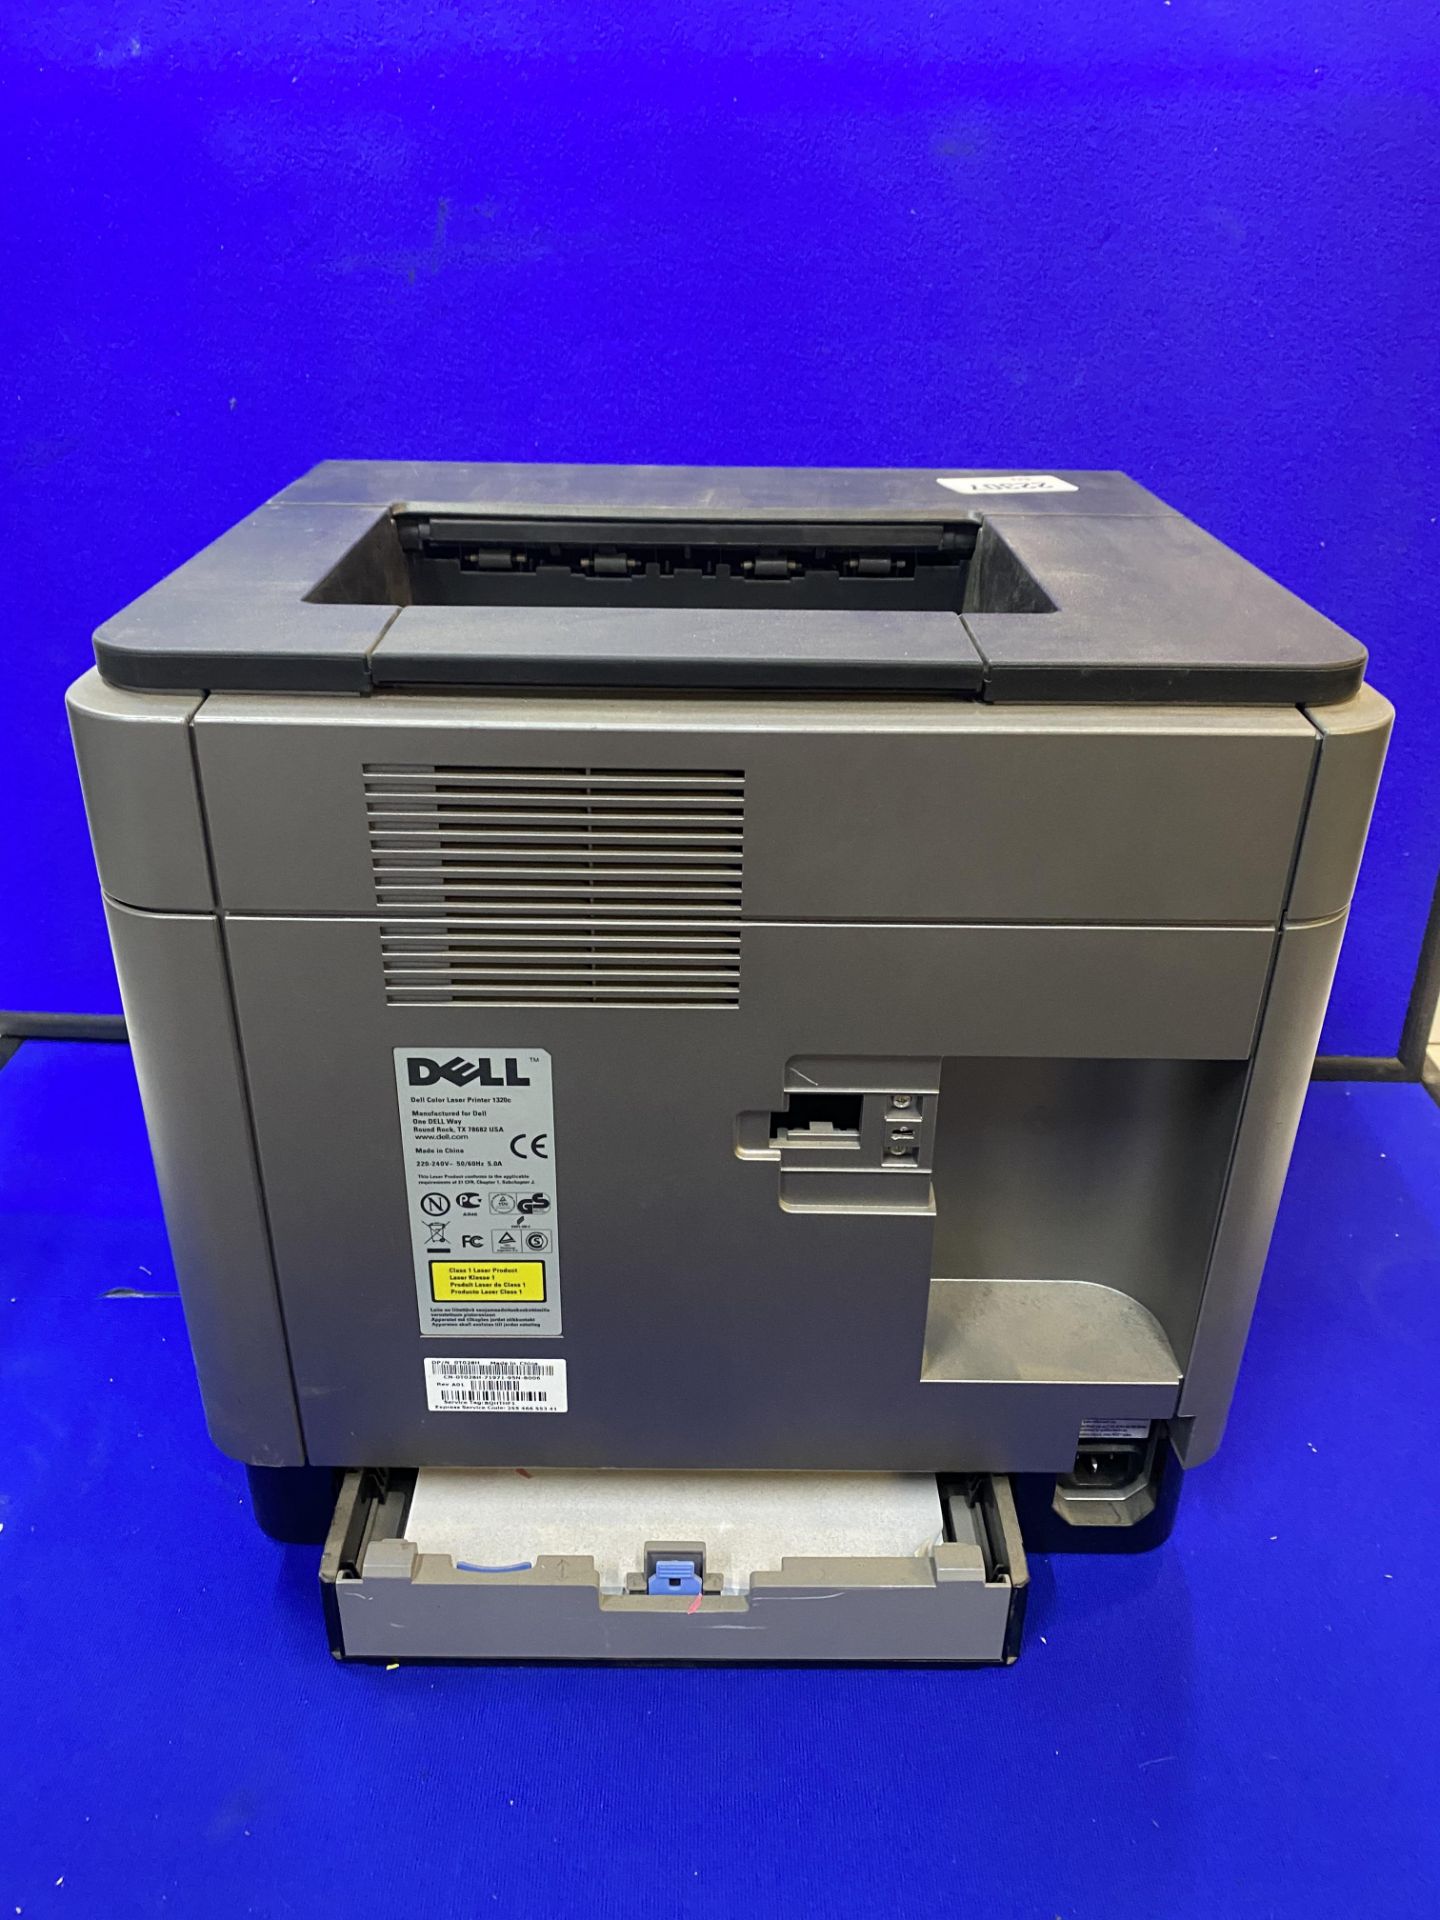 Dell 1320c Colour Network Laser Printer - Image 15 of 18